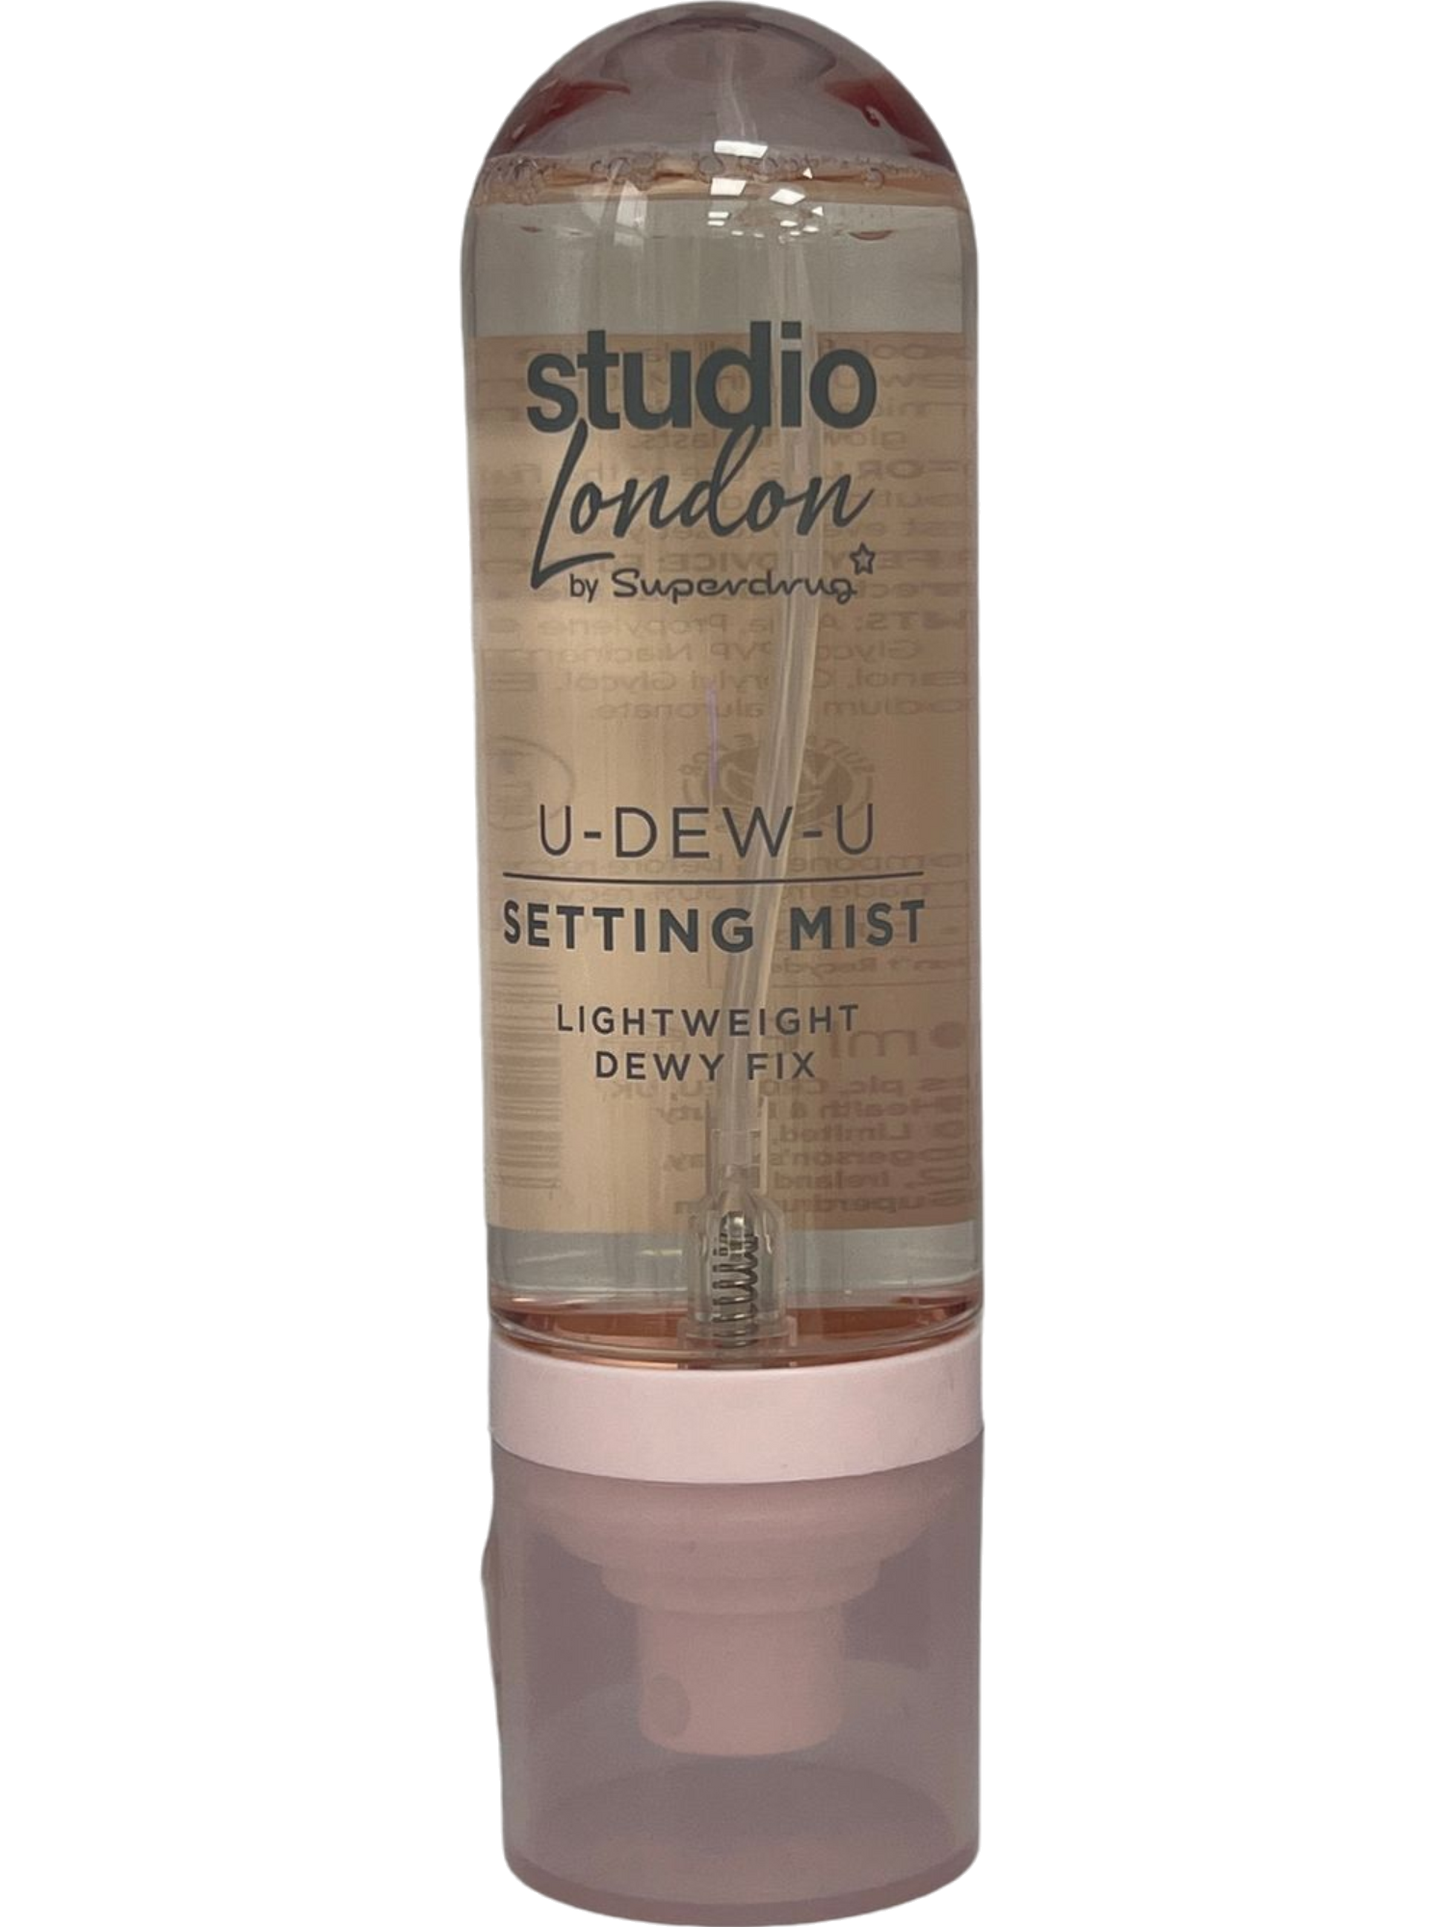 Studio London Lightweight Dewy Fix Setting Mist